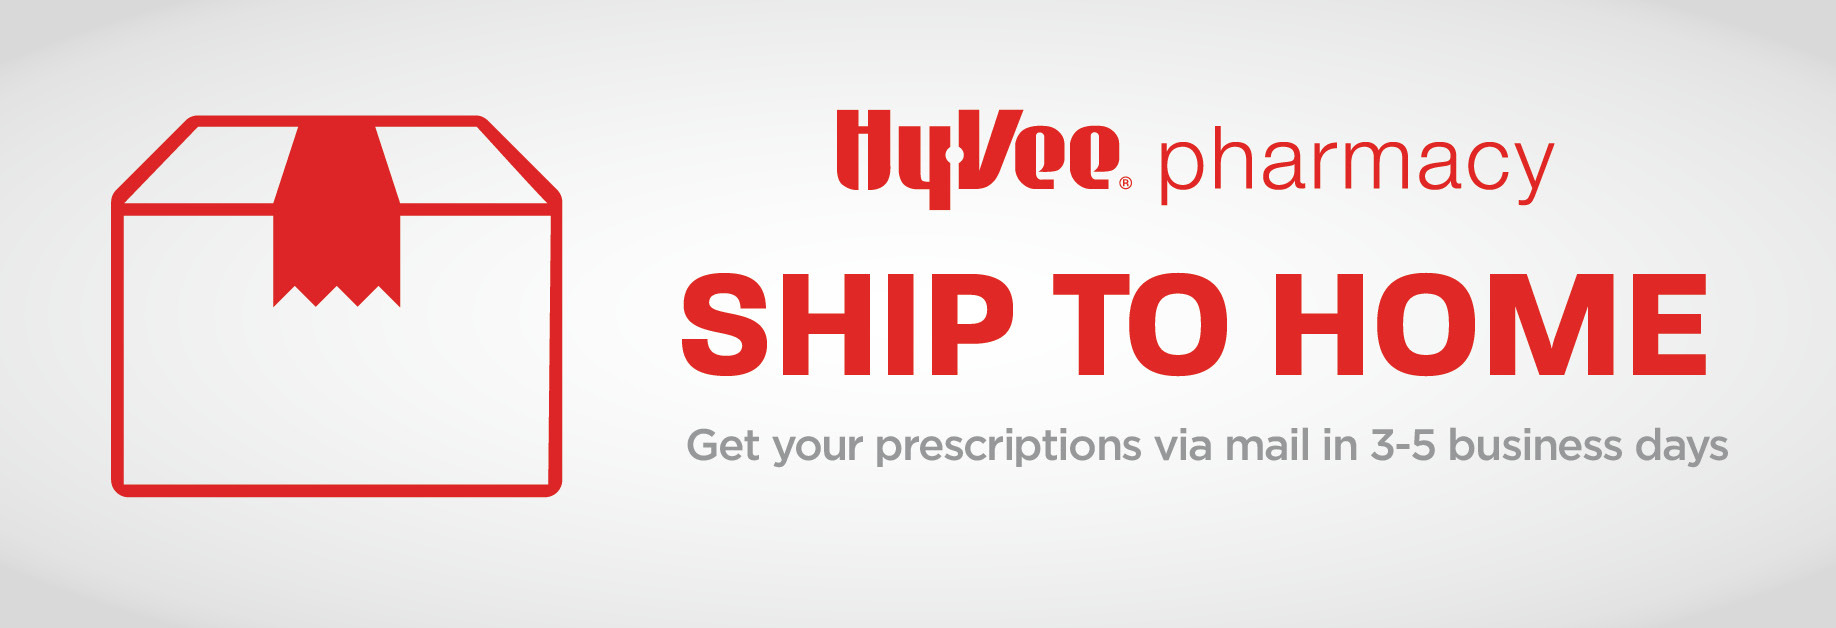 Hy-Vee Pharmacy Ship To Home